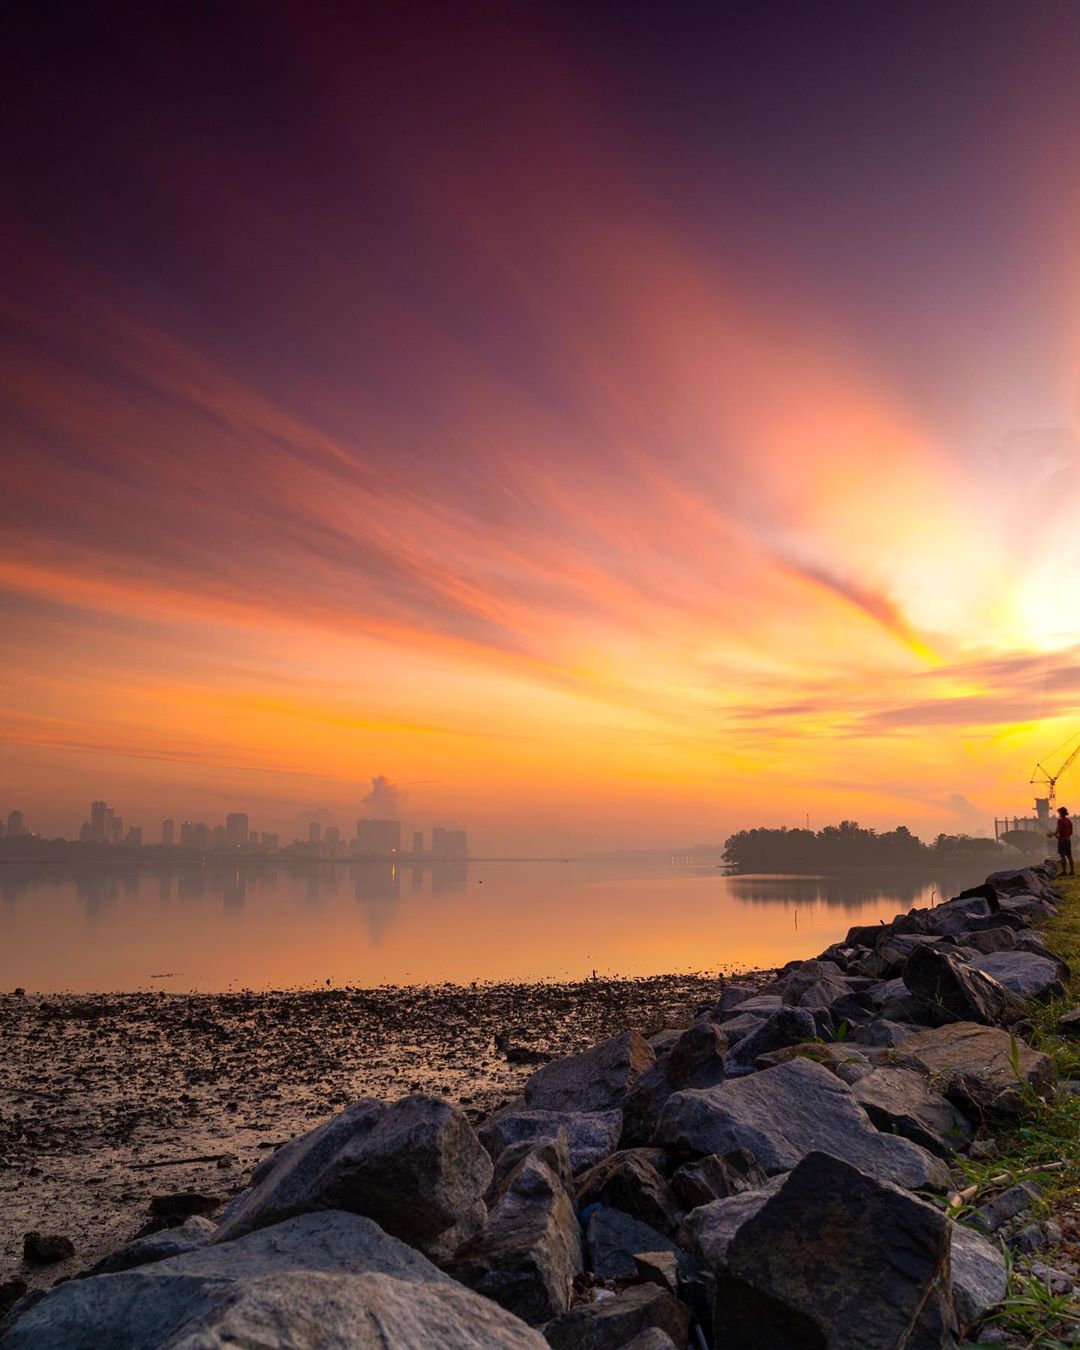 Sunrise & sunset spots in Singapore - Kranji Rservoir Park sunset